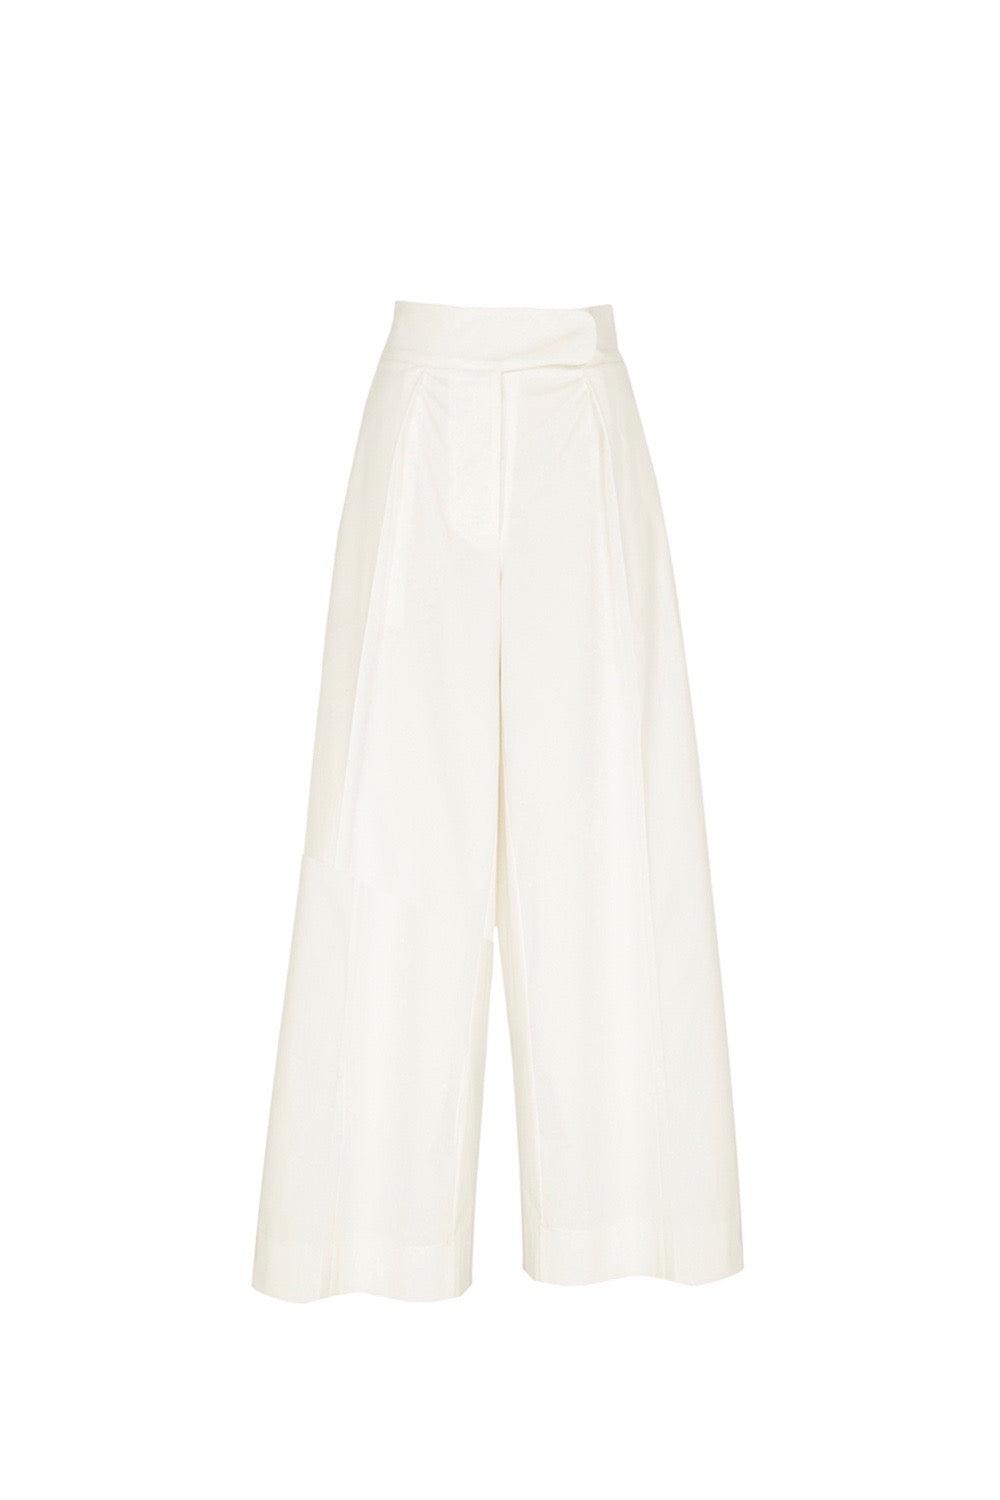 Pantaloni Donna Lug von siga - Pants - Bianco - Inà Boutique